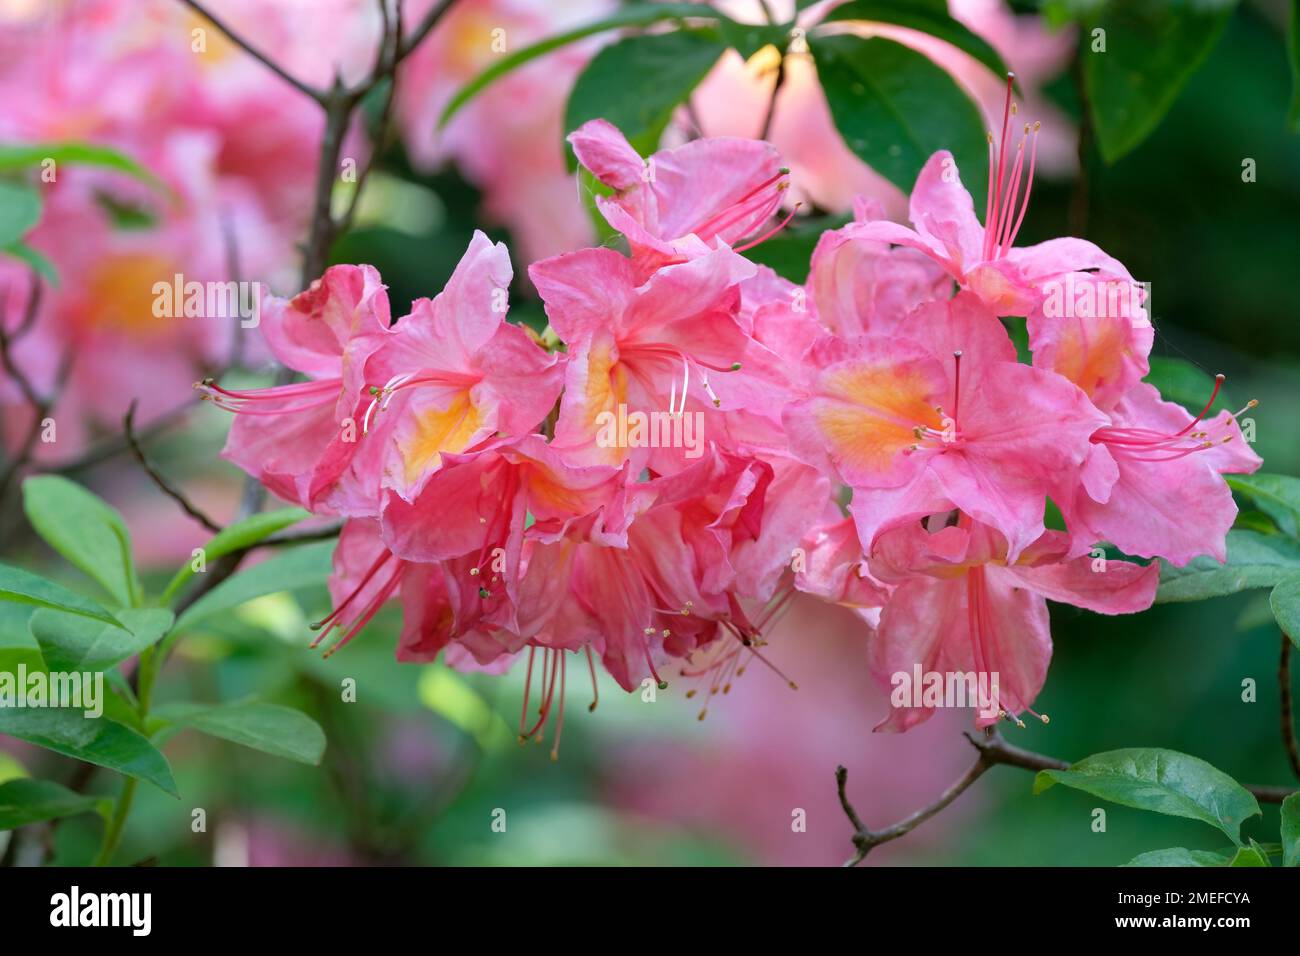 Rhododendron Pucella, Pucella azalea, Fanny azalea, Deciduous shrub, Ghent hybrid with pale, purplish pink flowers with an orange blotch Stock Photo